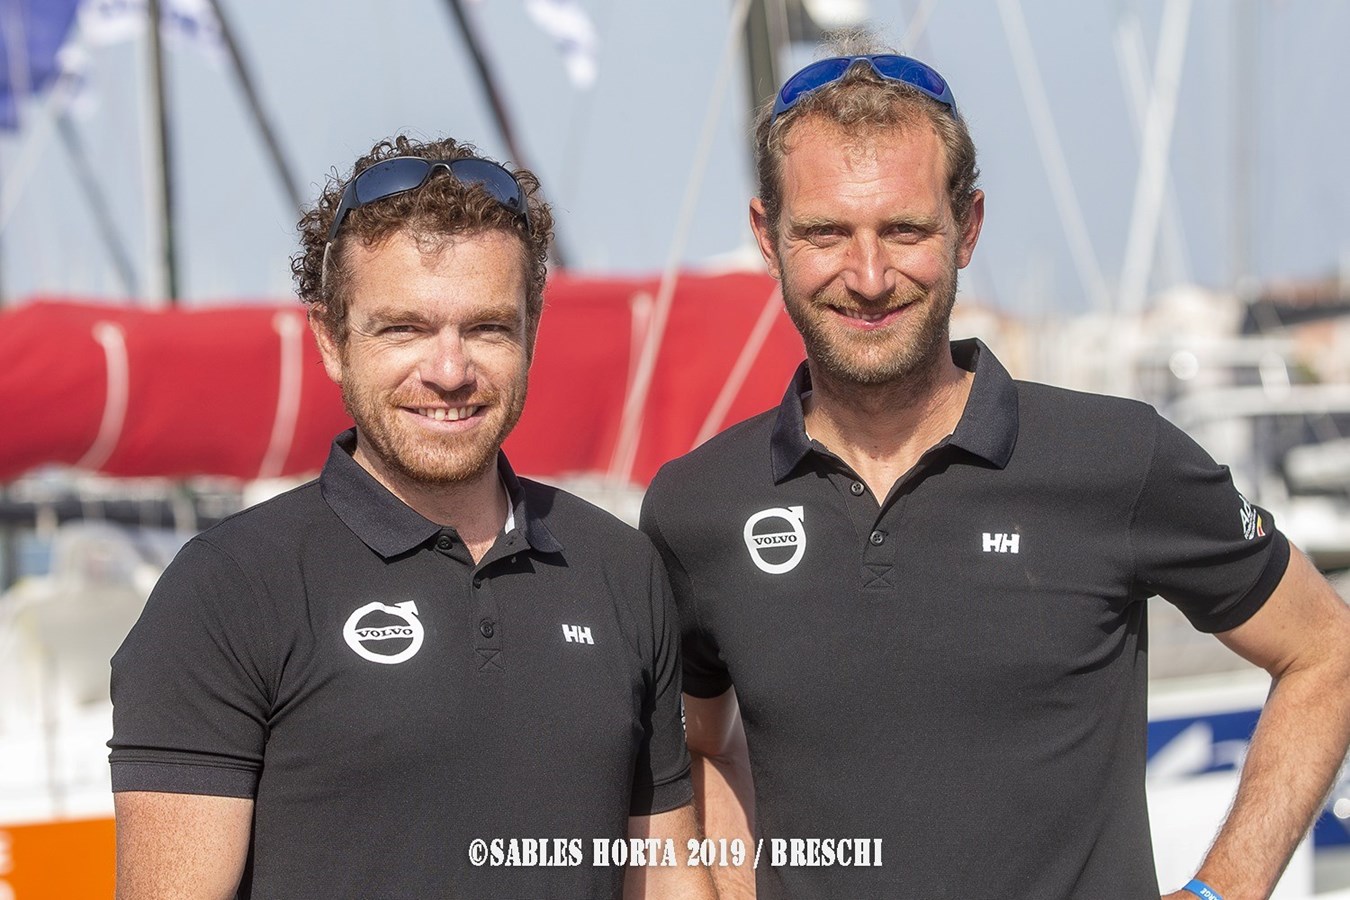 Jonas Gerckens et son co-skipper Benoit Hantzperg.  Jonas Gerckens dans le top 5 de la 7ème édition de la course Les Sables - Horta – Les Sables 